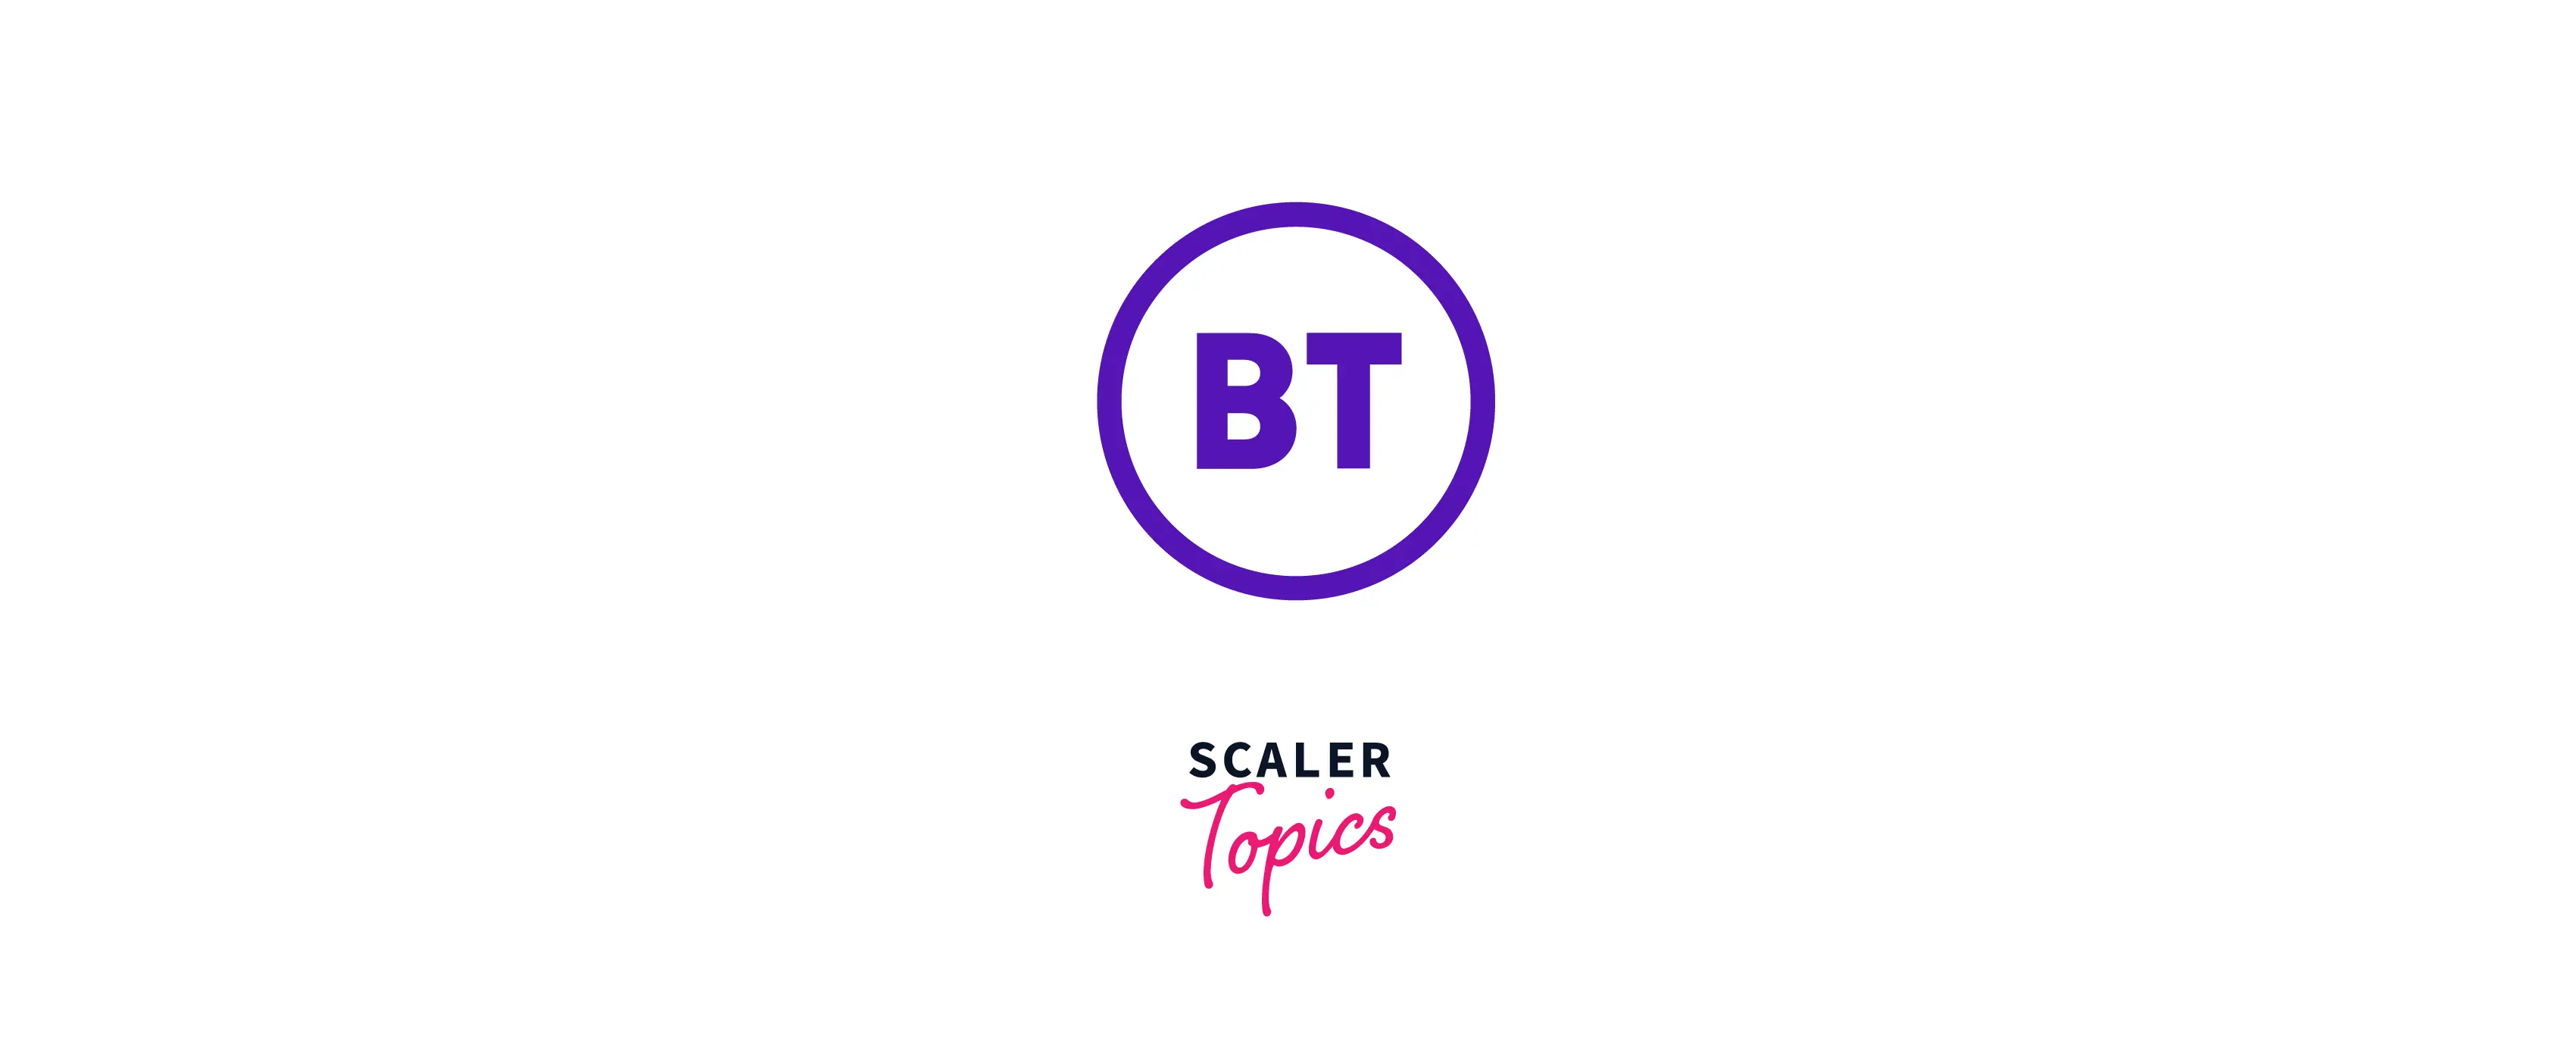 bt group logo